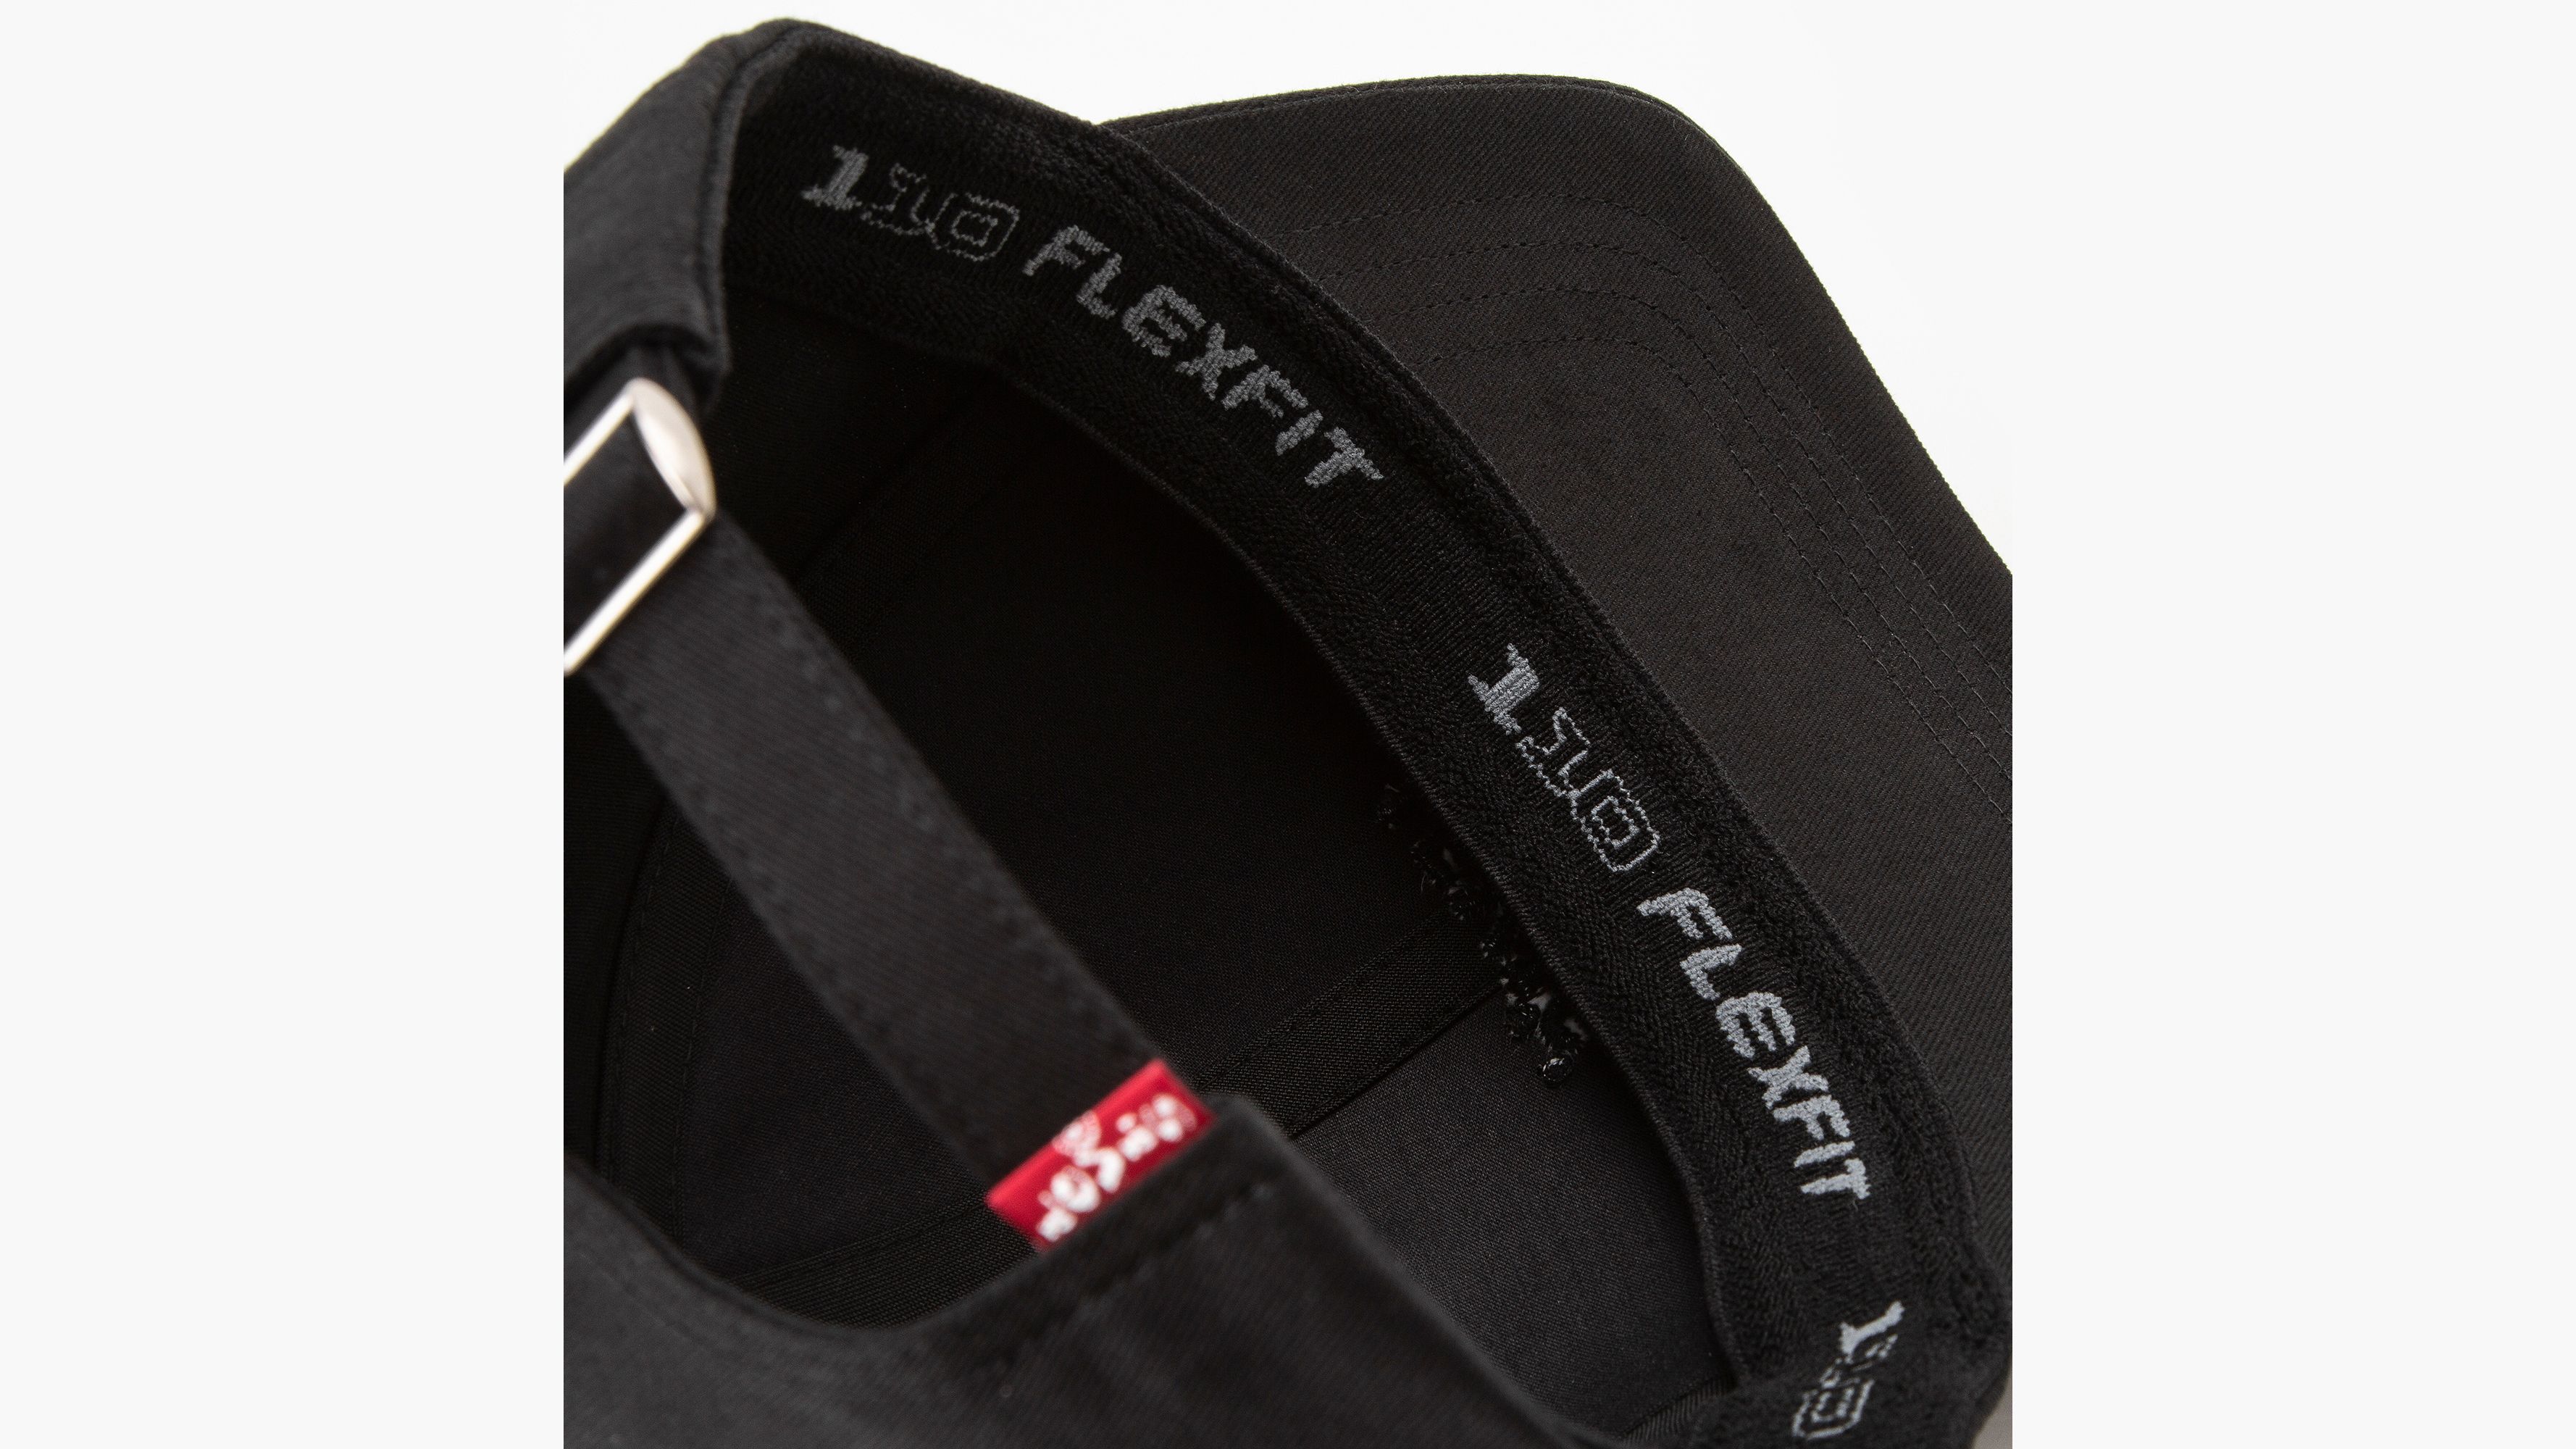 Headline Logo Flexfit® Cap - Black | Levi\'s® US